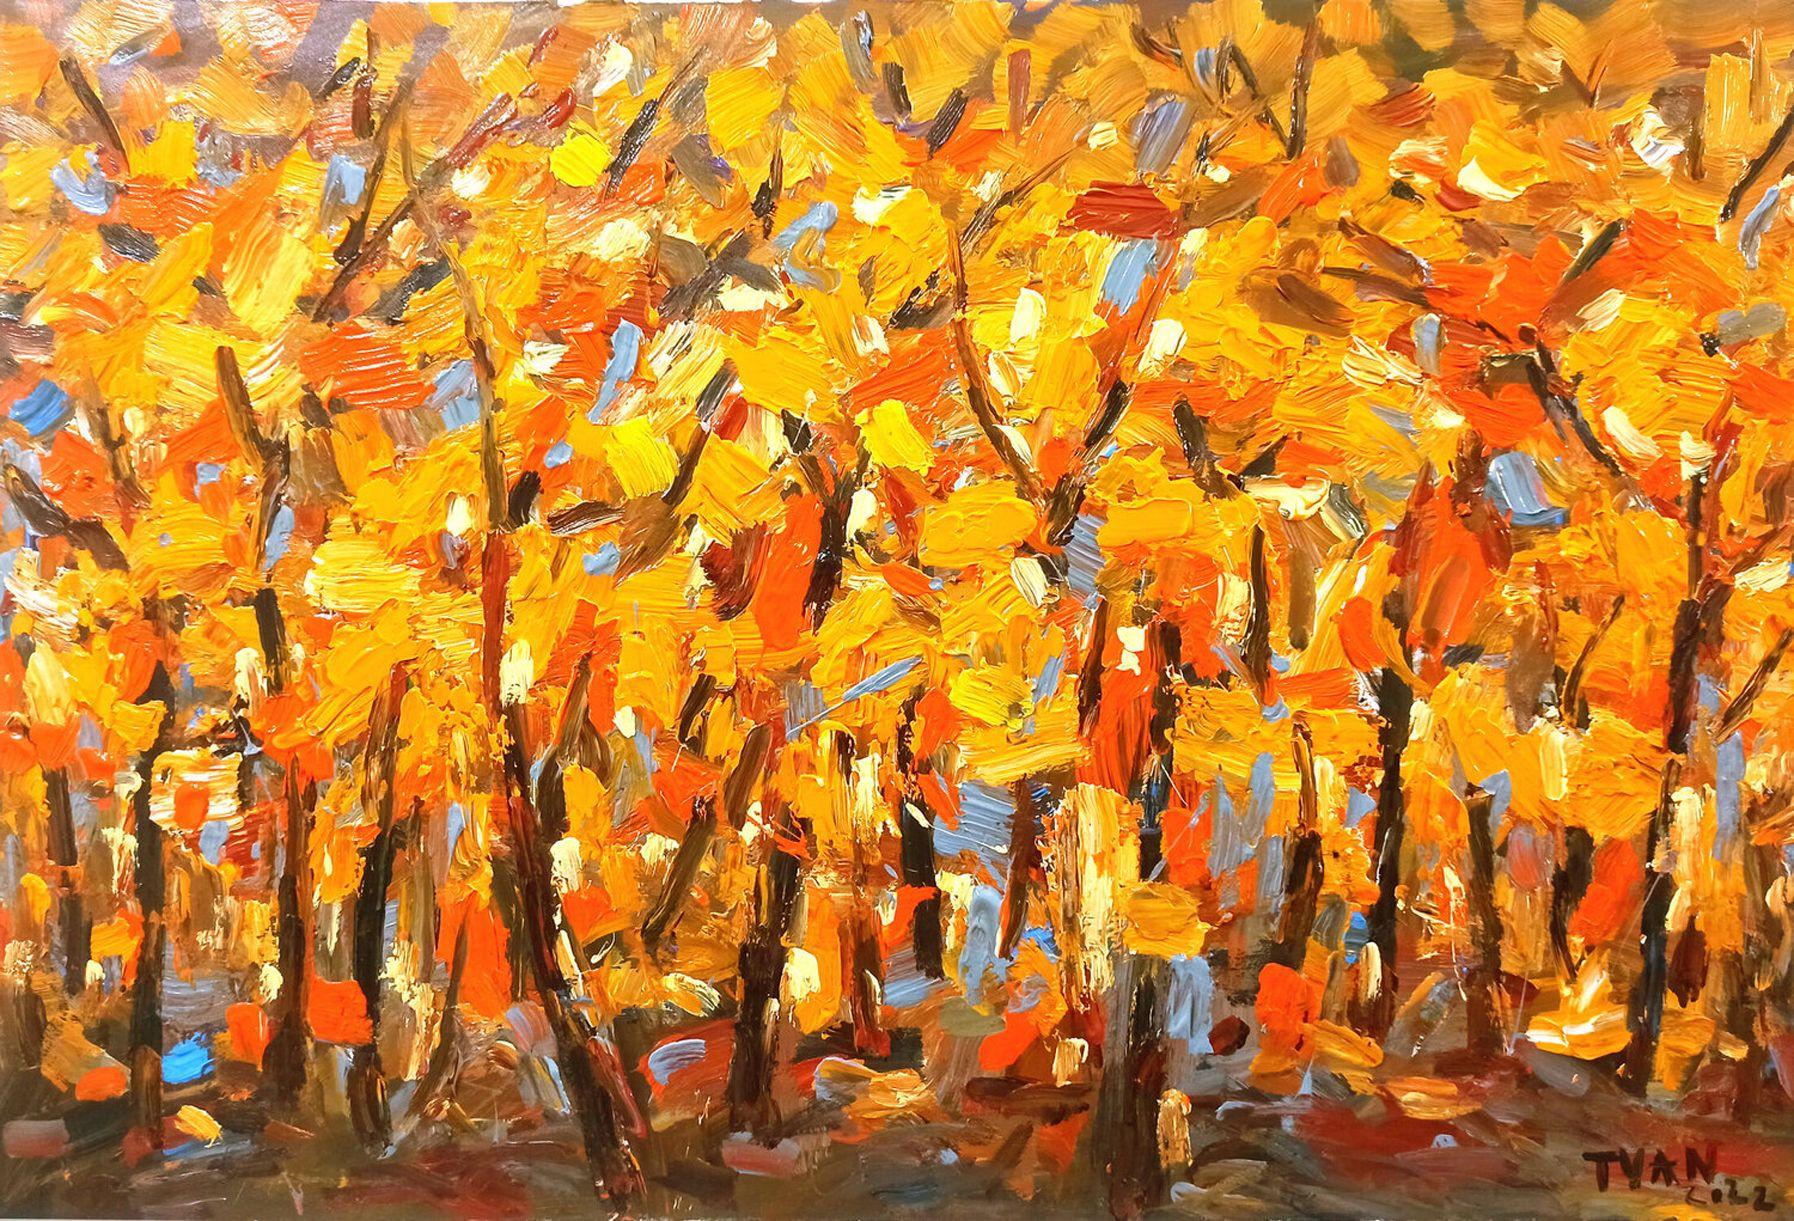 The feeling of autumn 2, Painting, Acrylic on Canvas